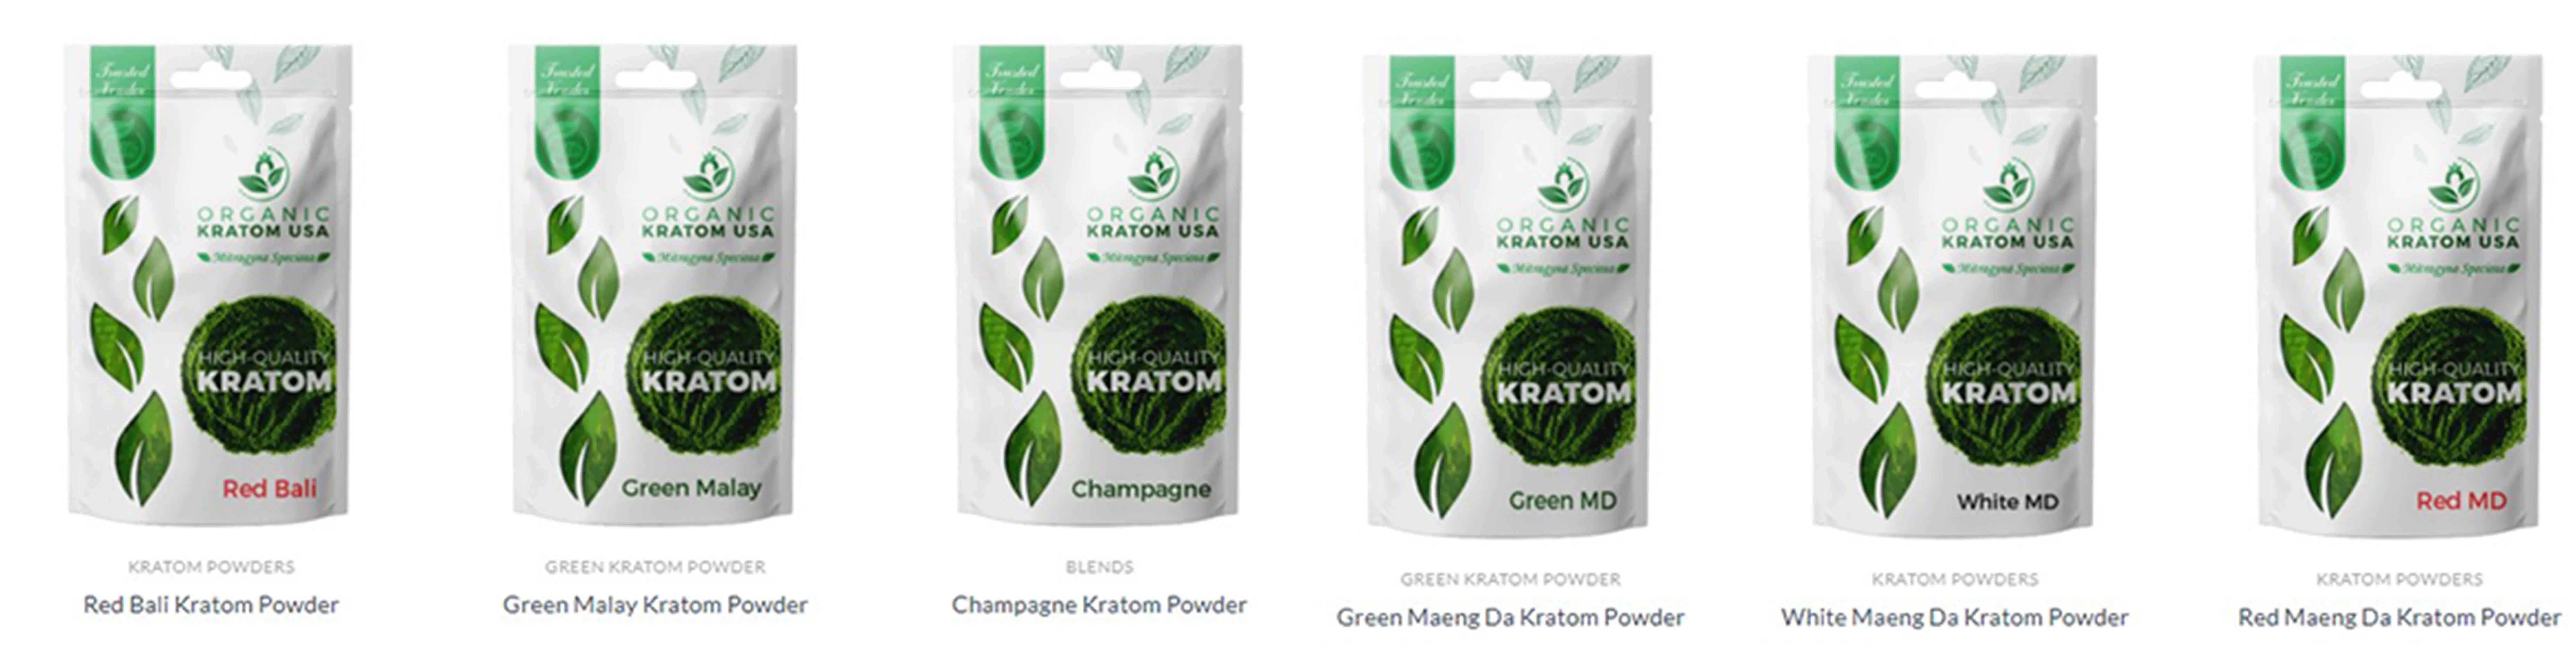 image of organic kratom products